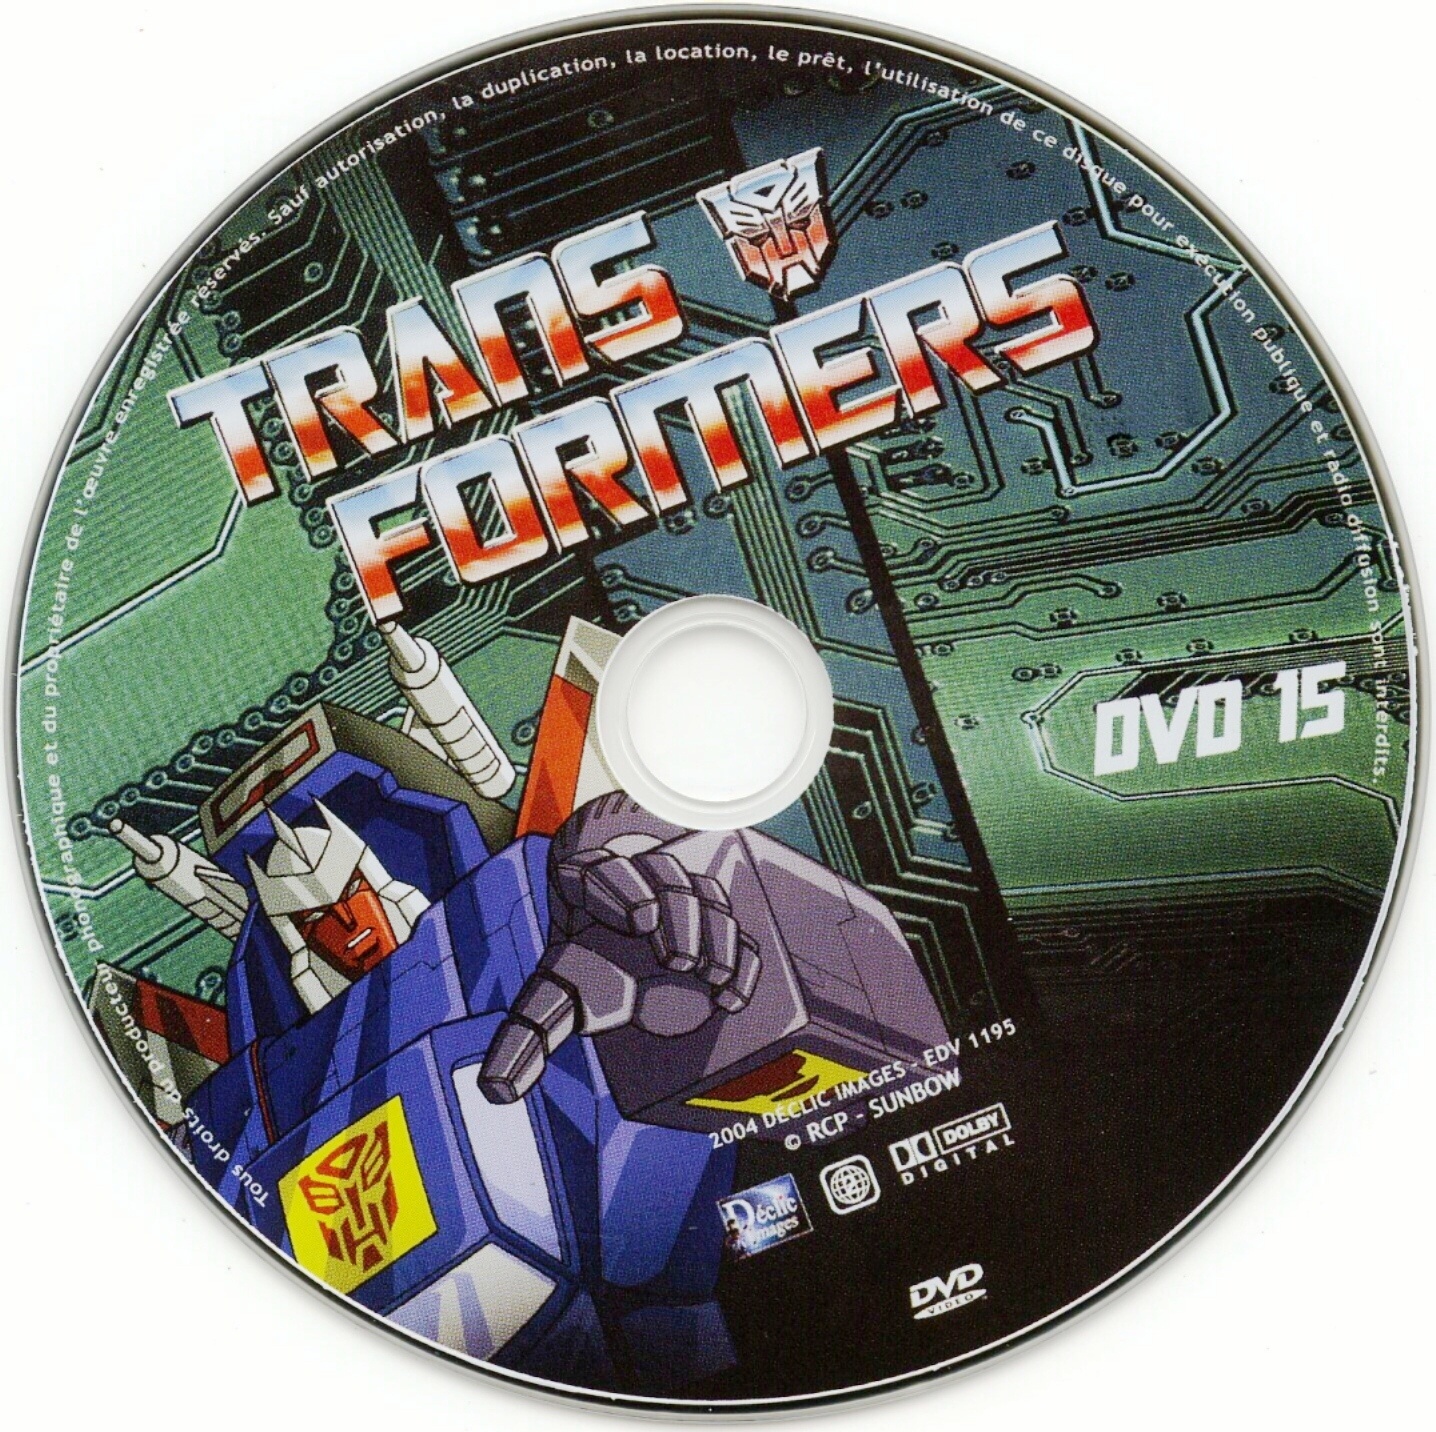 Transformers vol 15